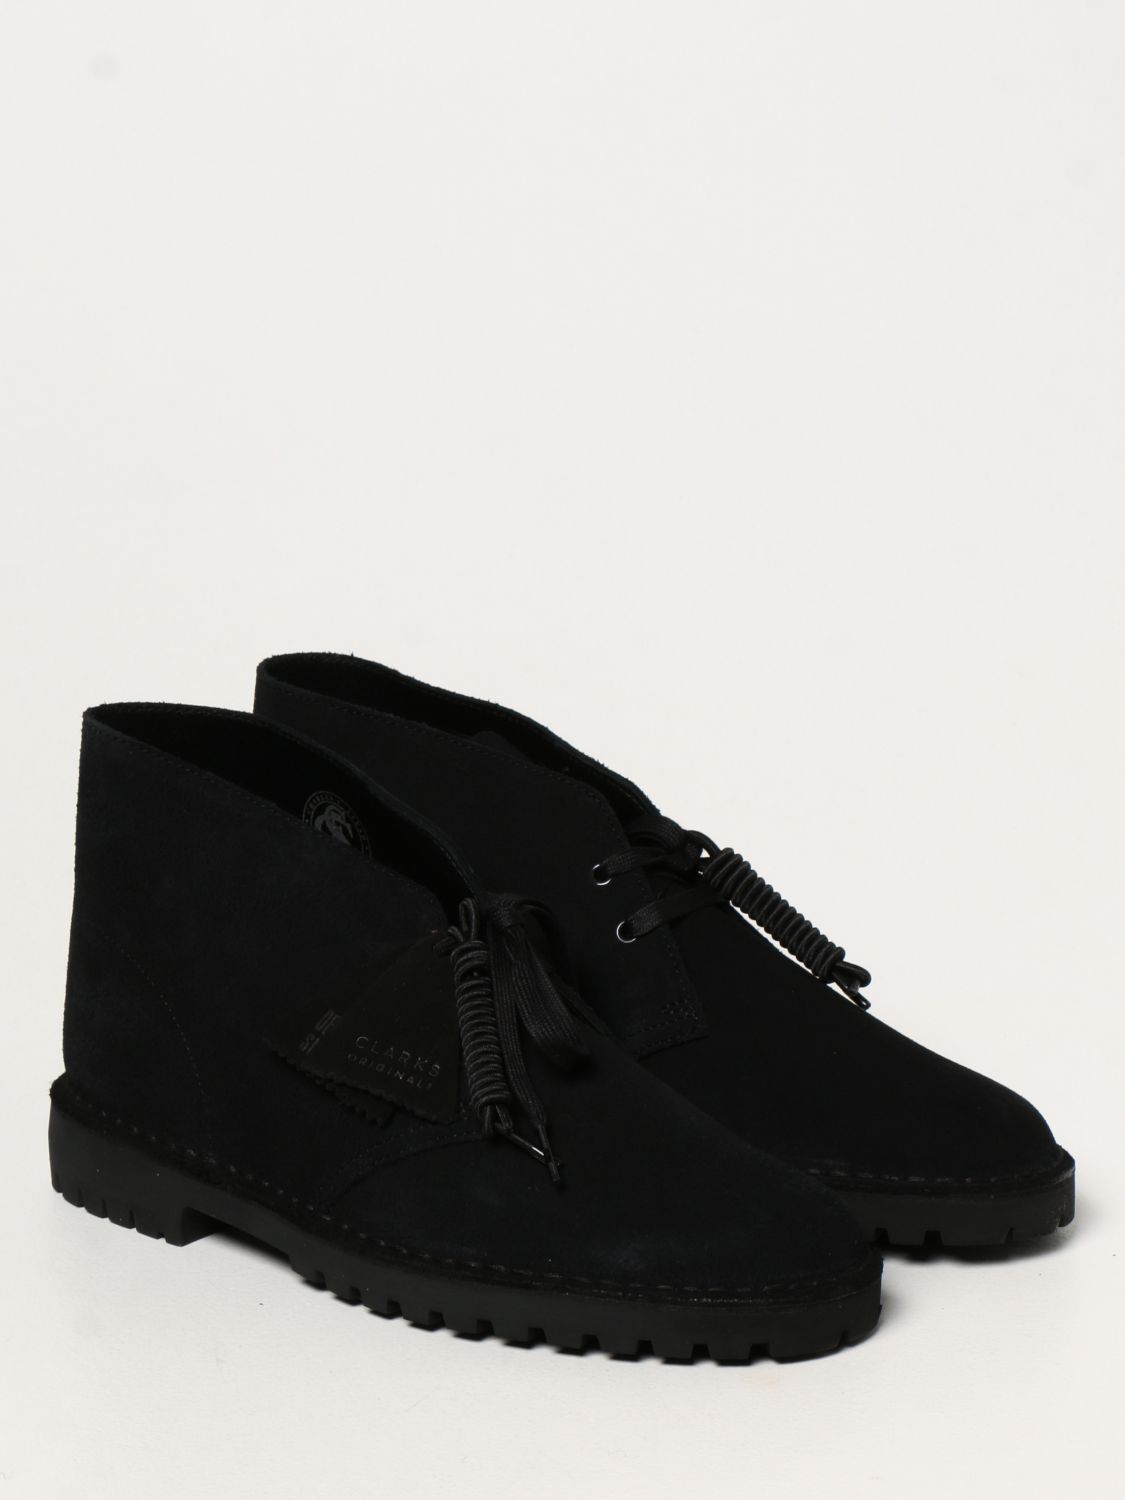 Desert boots Clarks: Shoes men Clarks Originals black 2